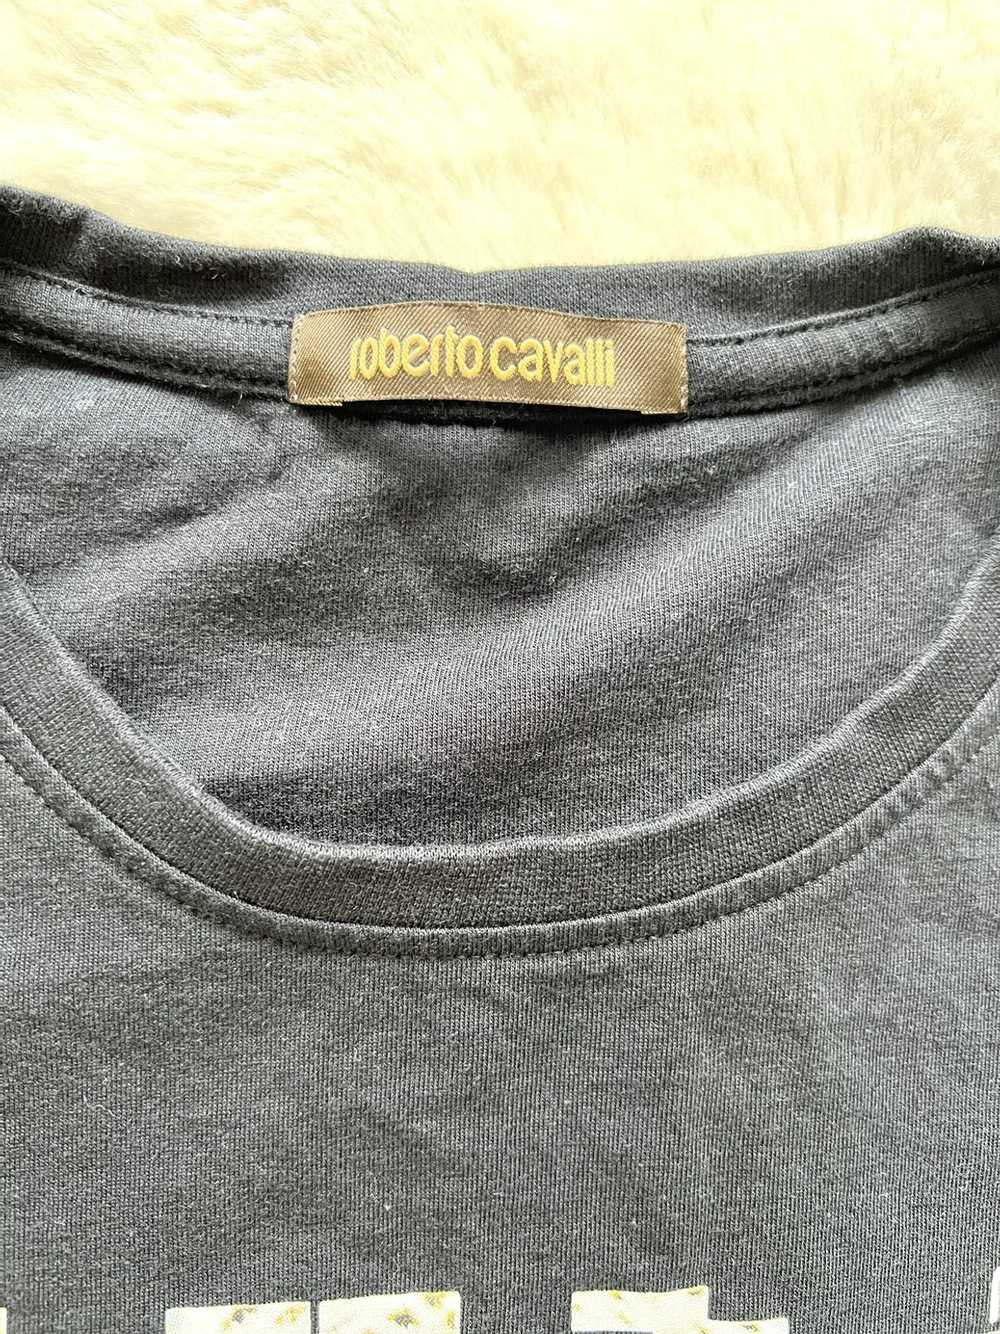 Roberto Cavalli Roberto Cavalli mens t-shirt size… - image 3